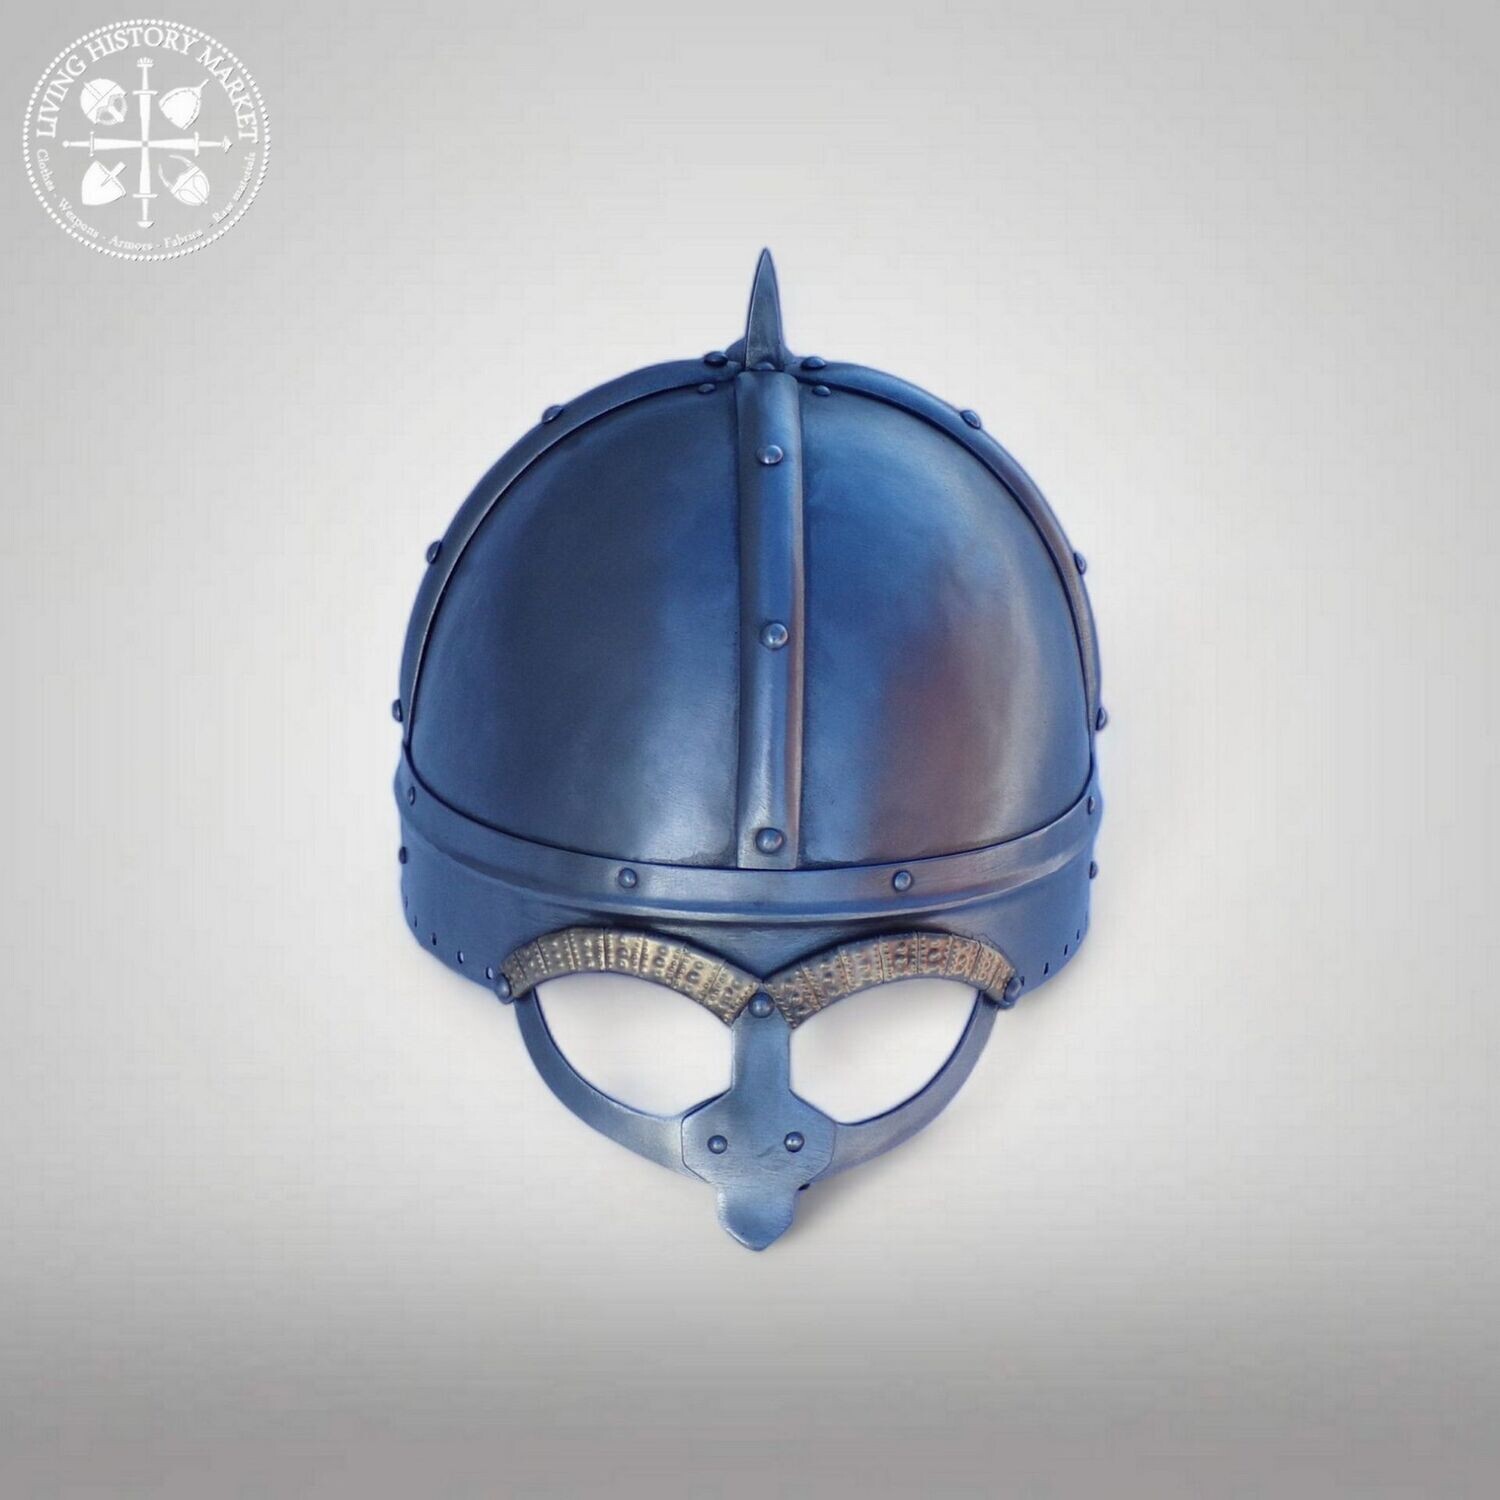 Tjele helmet - 10th century